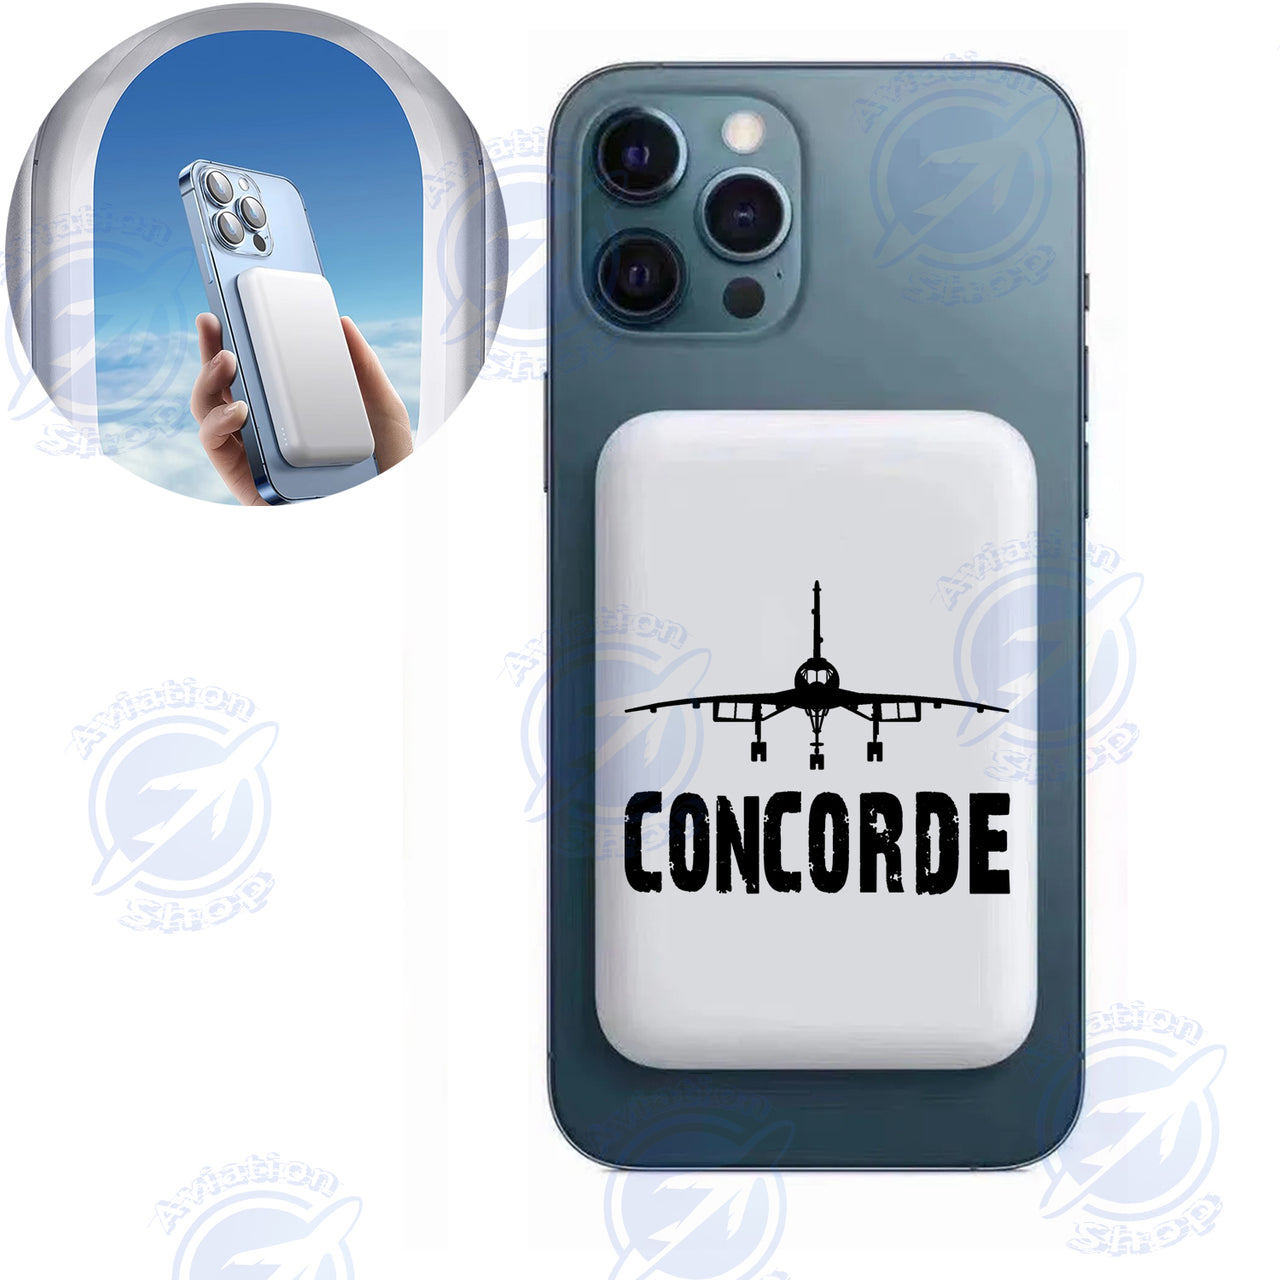 Concorde & Plane Designed MagSafe PowerBanks